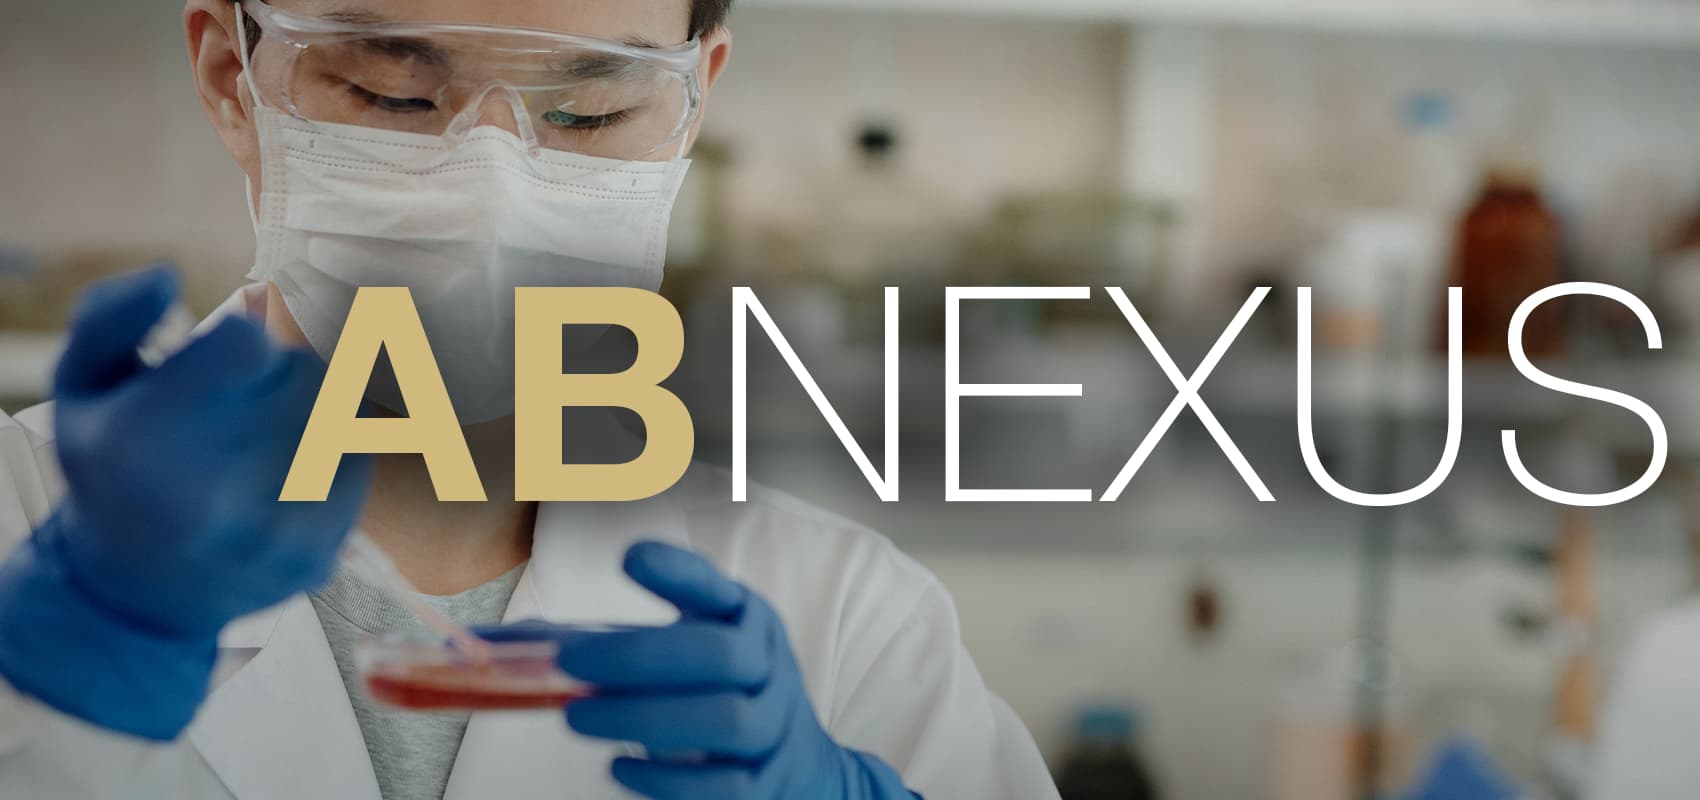 Lab worker examining sample with AB Nexus written on image